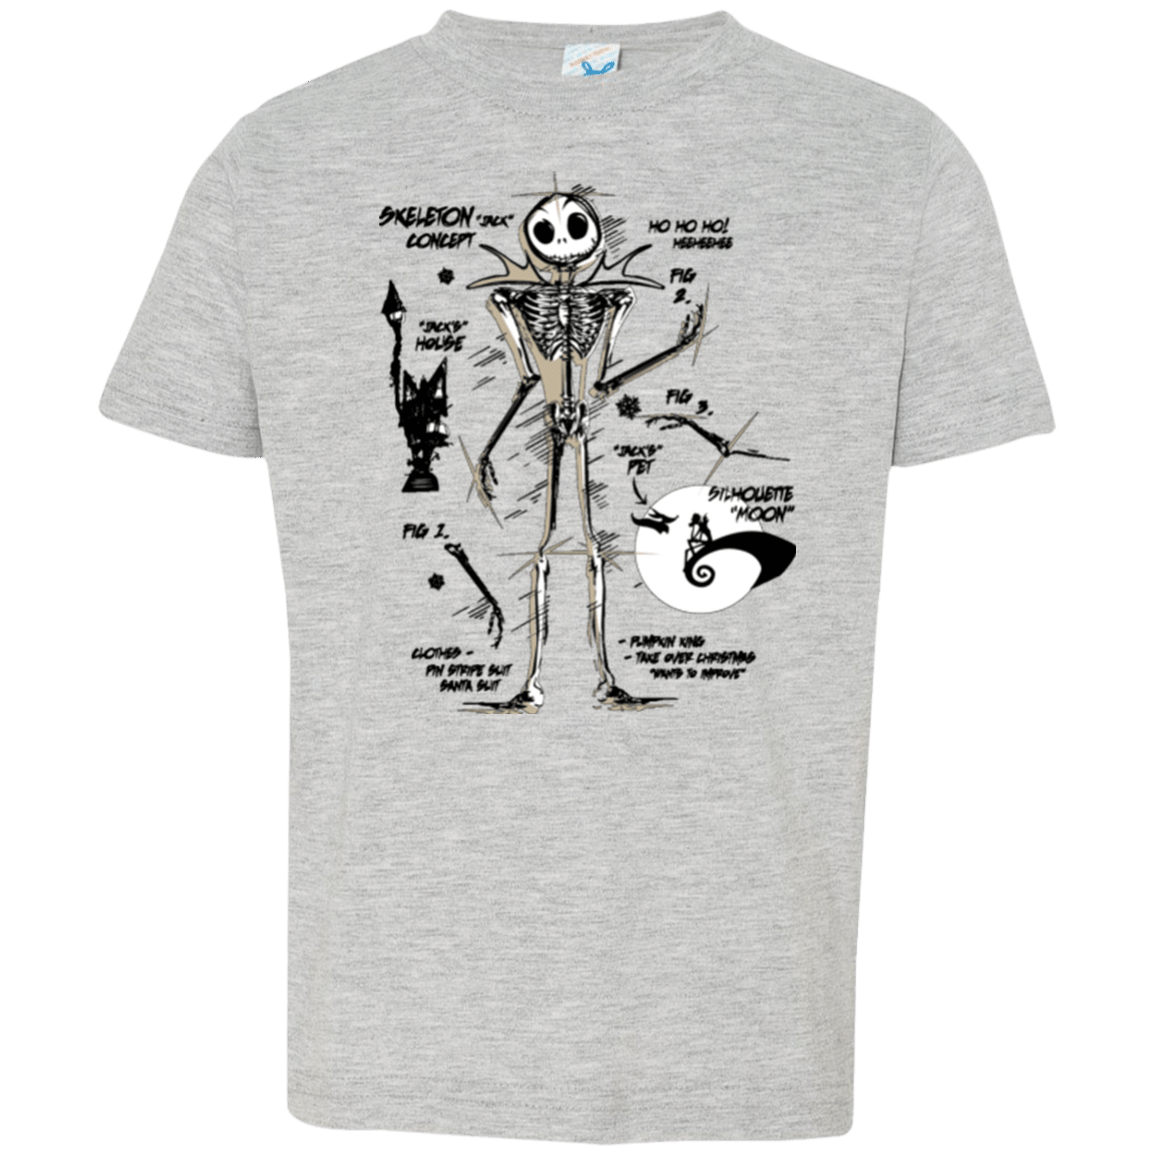 T-Shirts Heather / 2T Skeleton Concept Toddler Premium T-Shirt